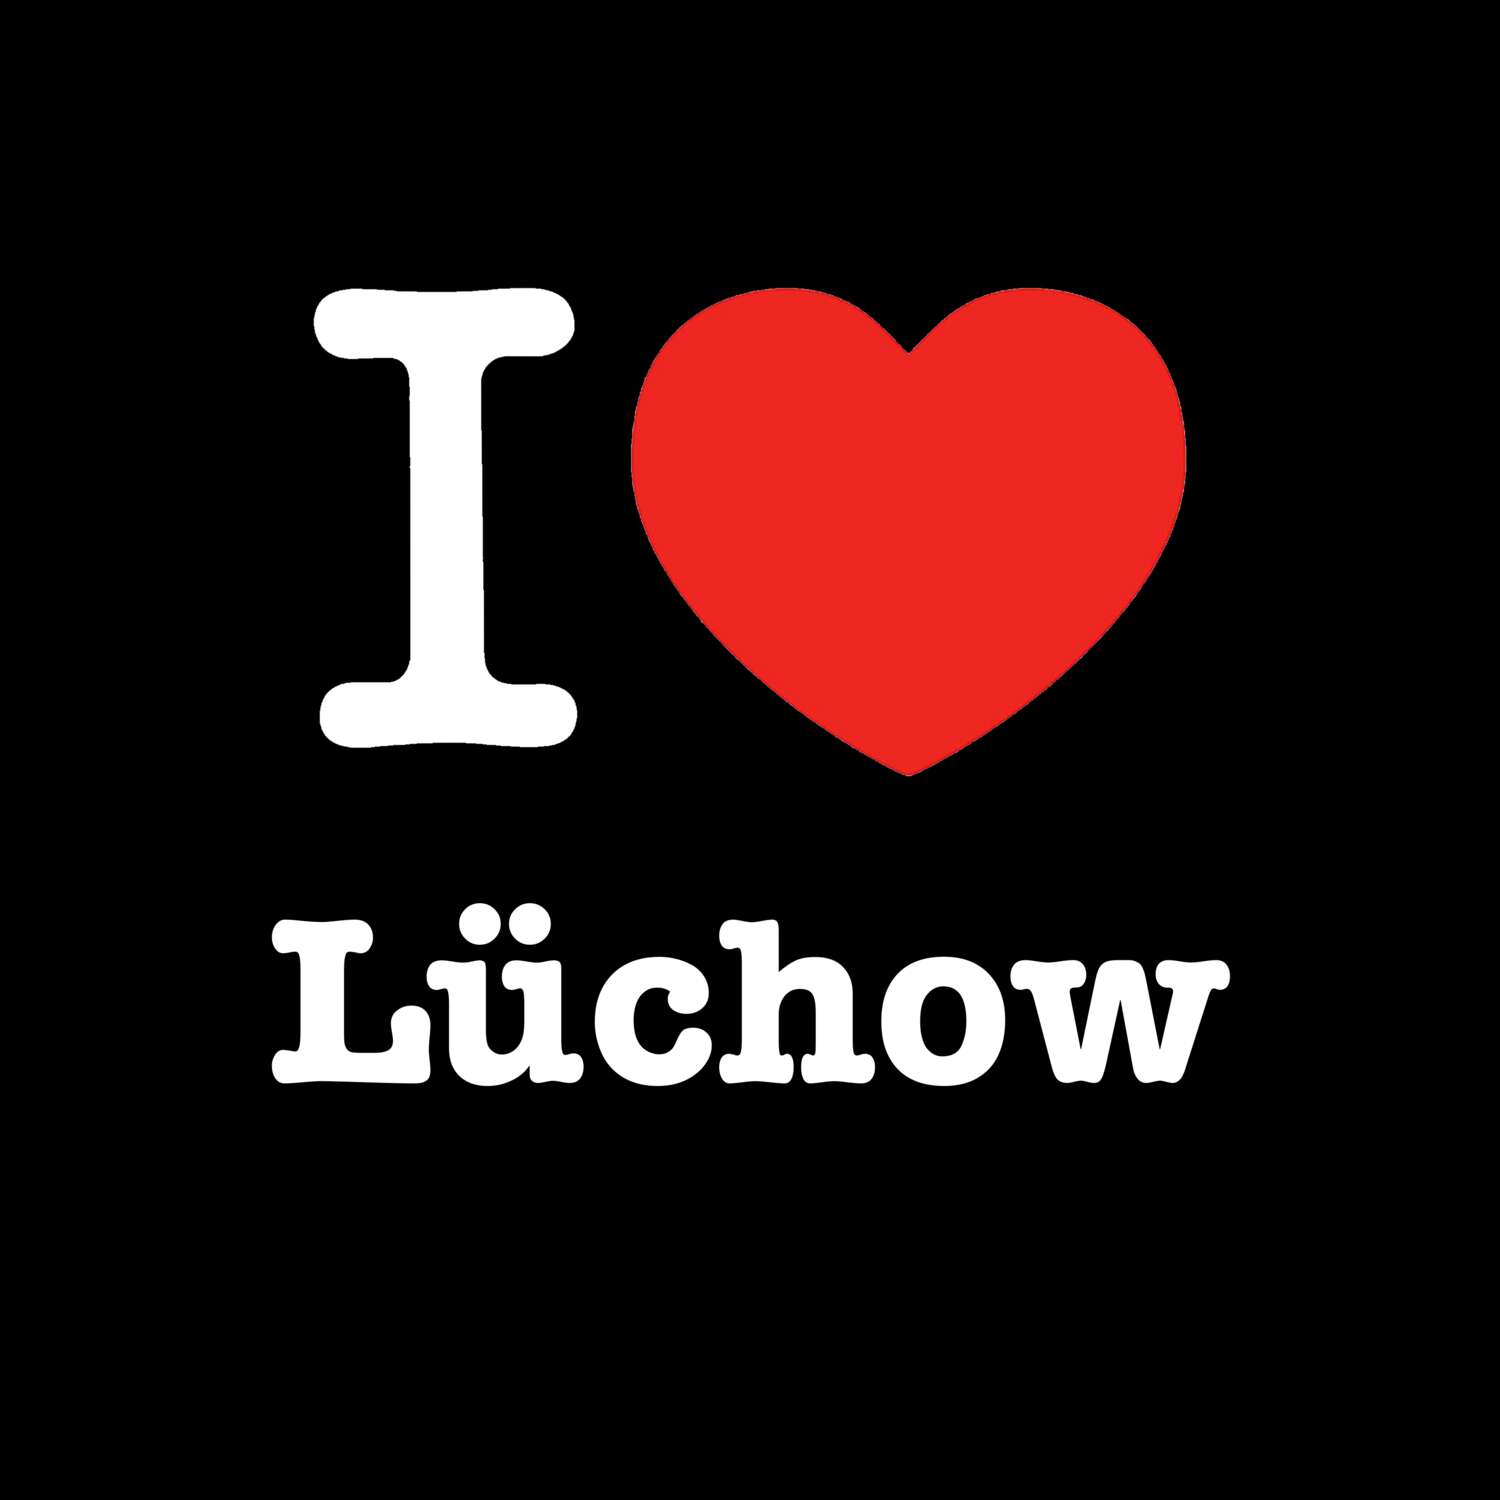 Lüchow T-Shirt »I love«